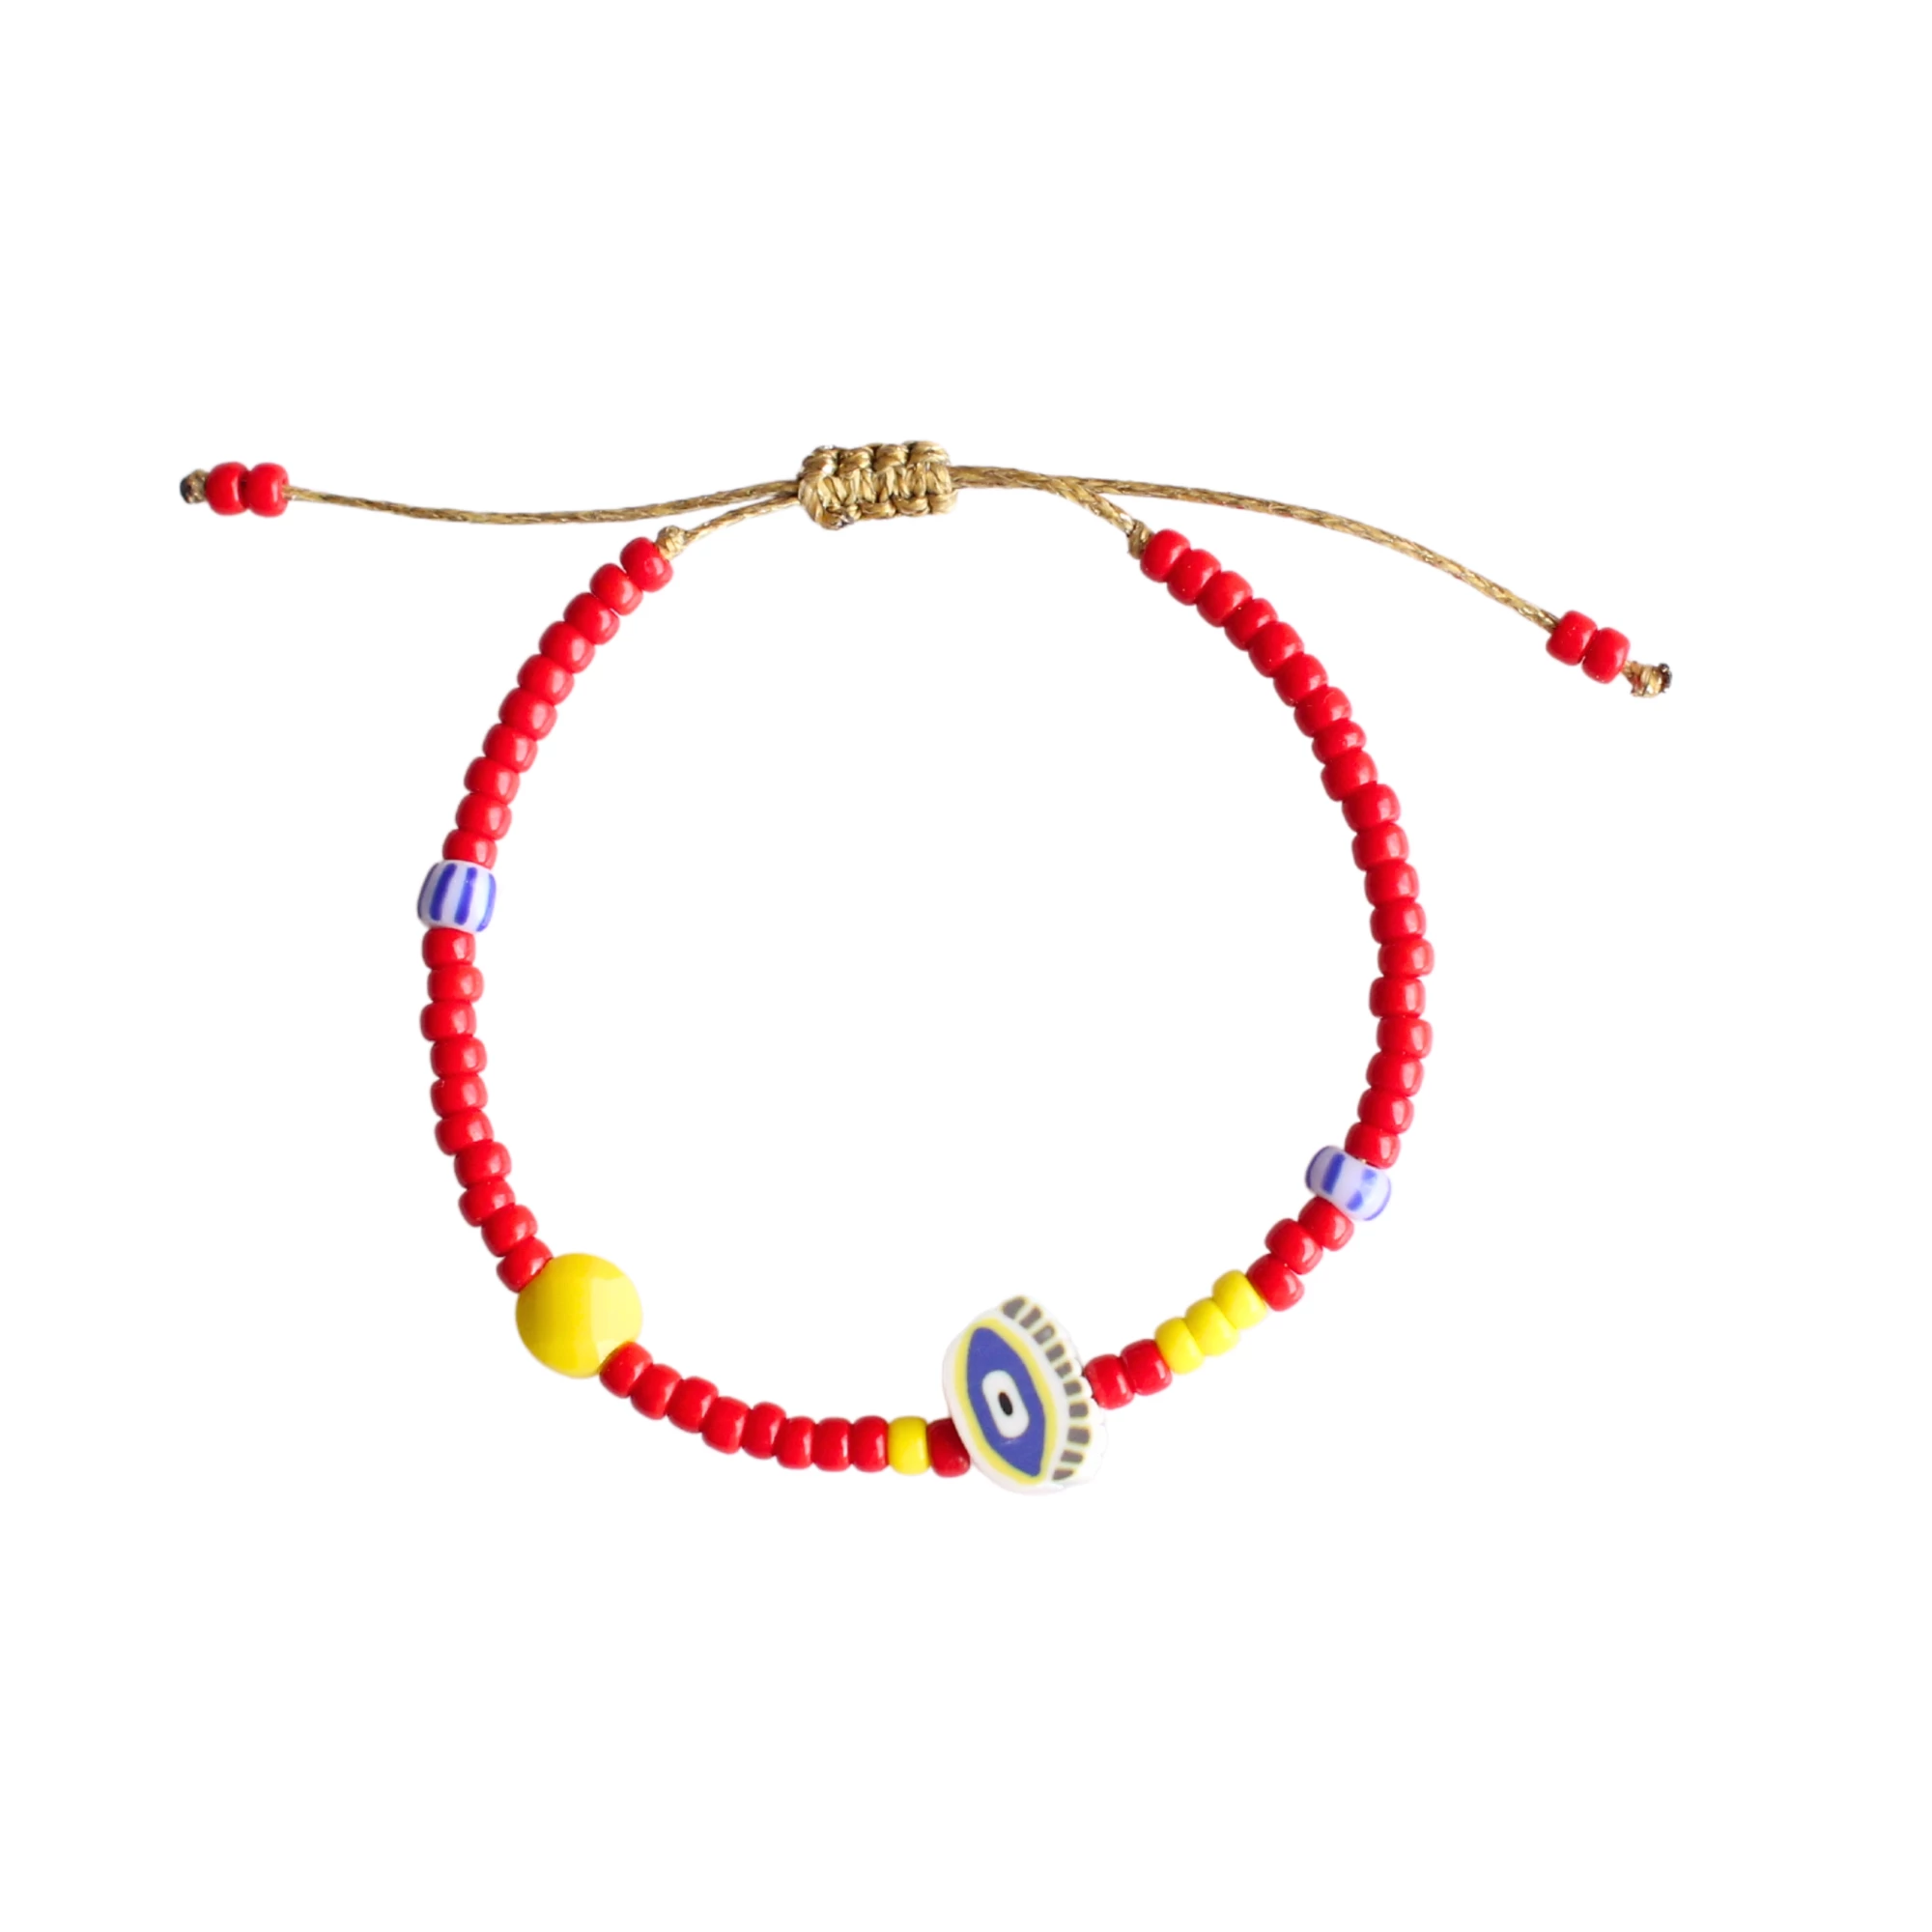 The “POP”eye bracelet